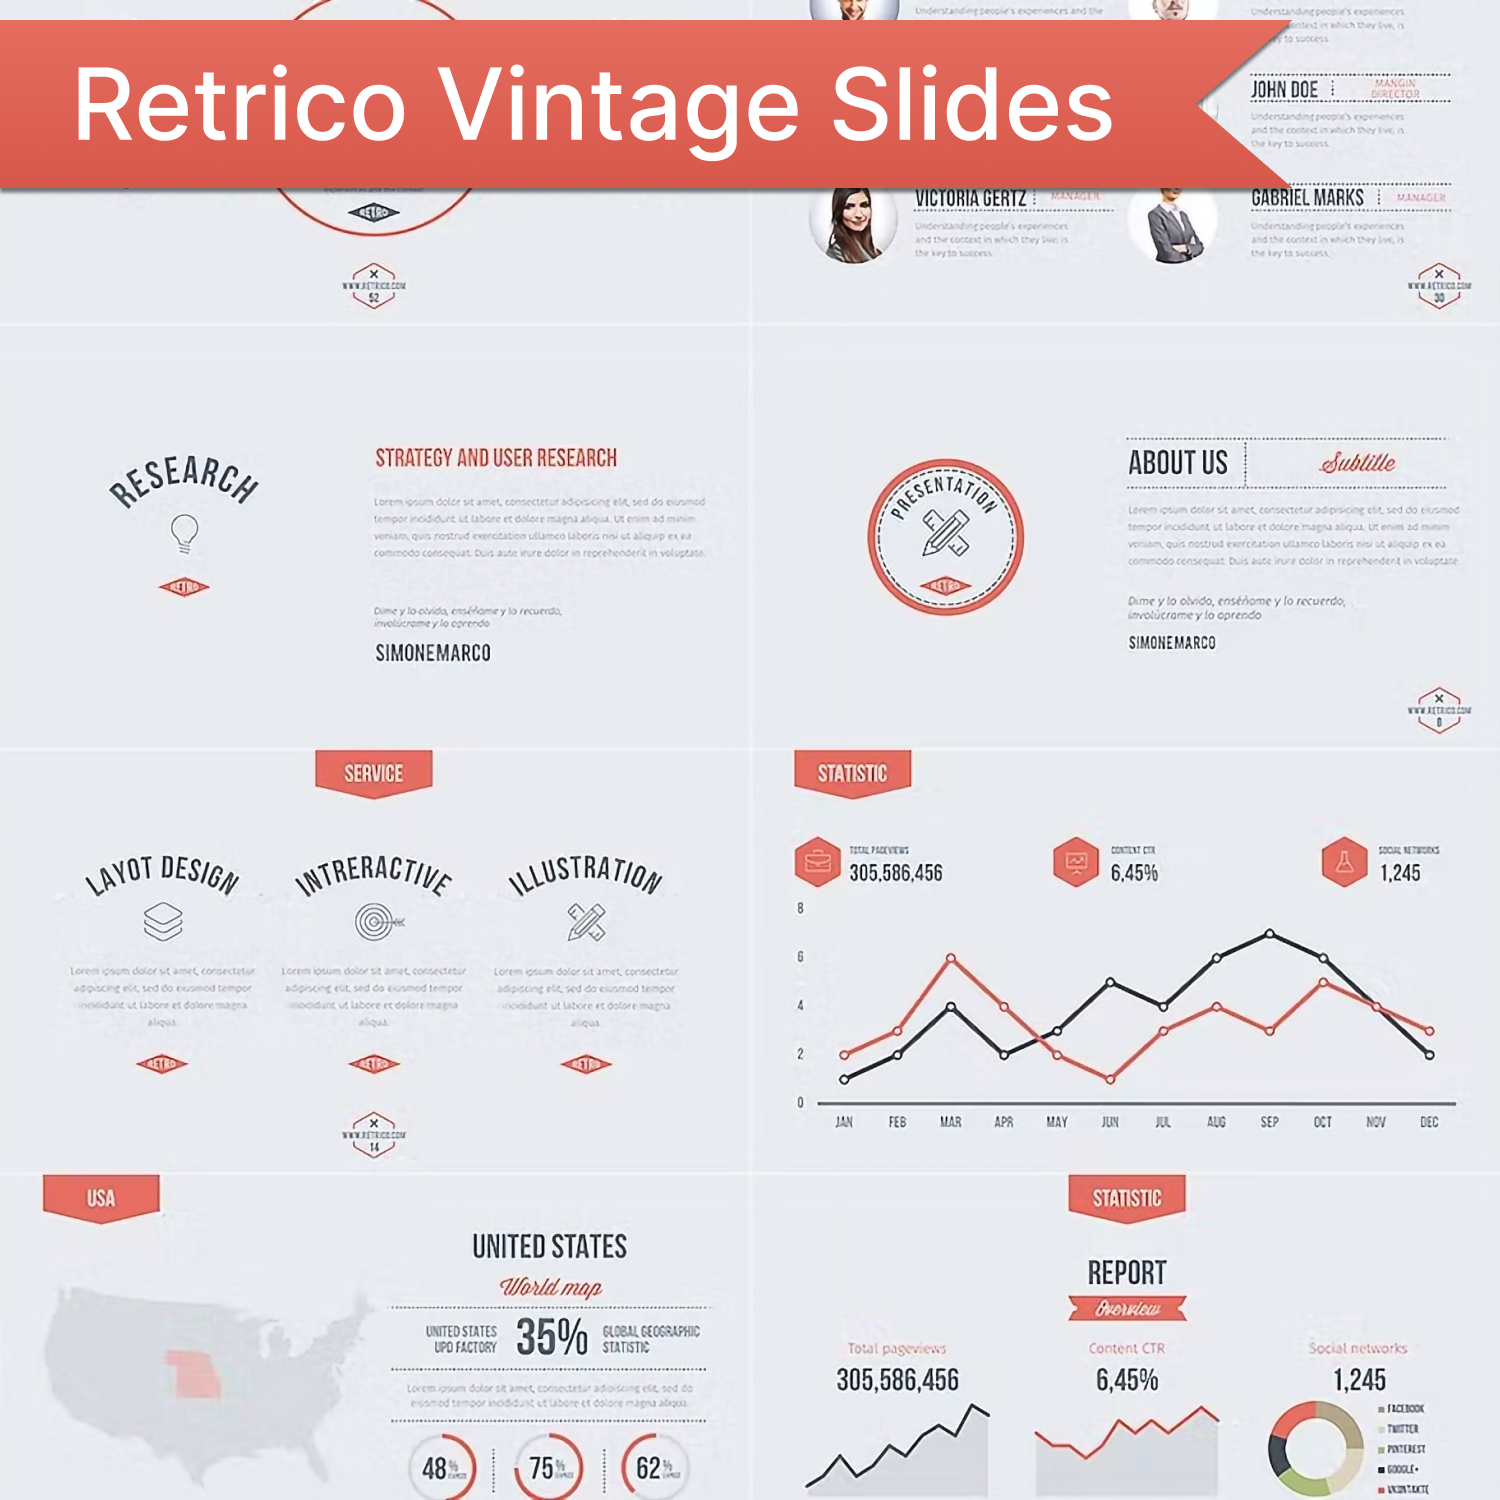 Preview retrico vintage slides.